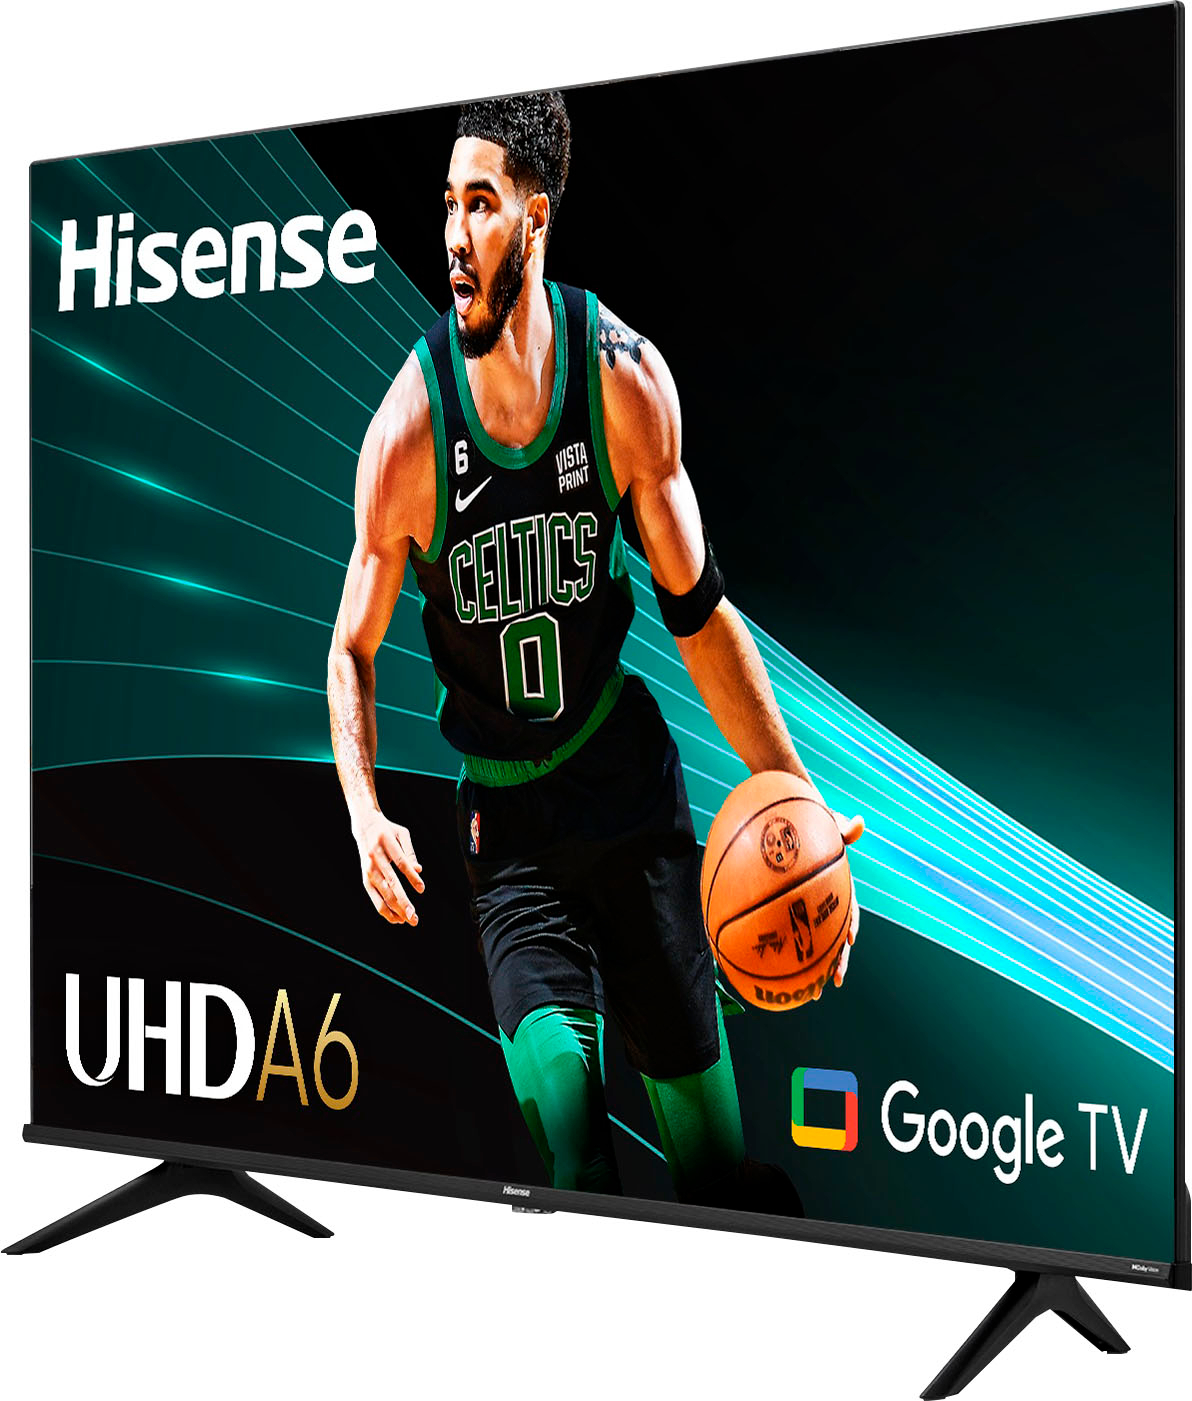 Smart Tv 65 Pulgadas 4k Ultra Hd 65a6h - Hisense - Mandy Hogar